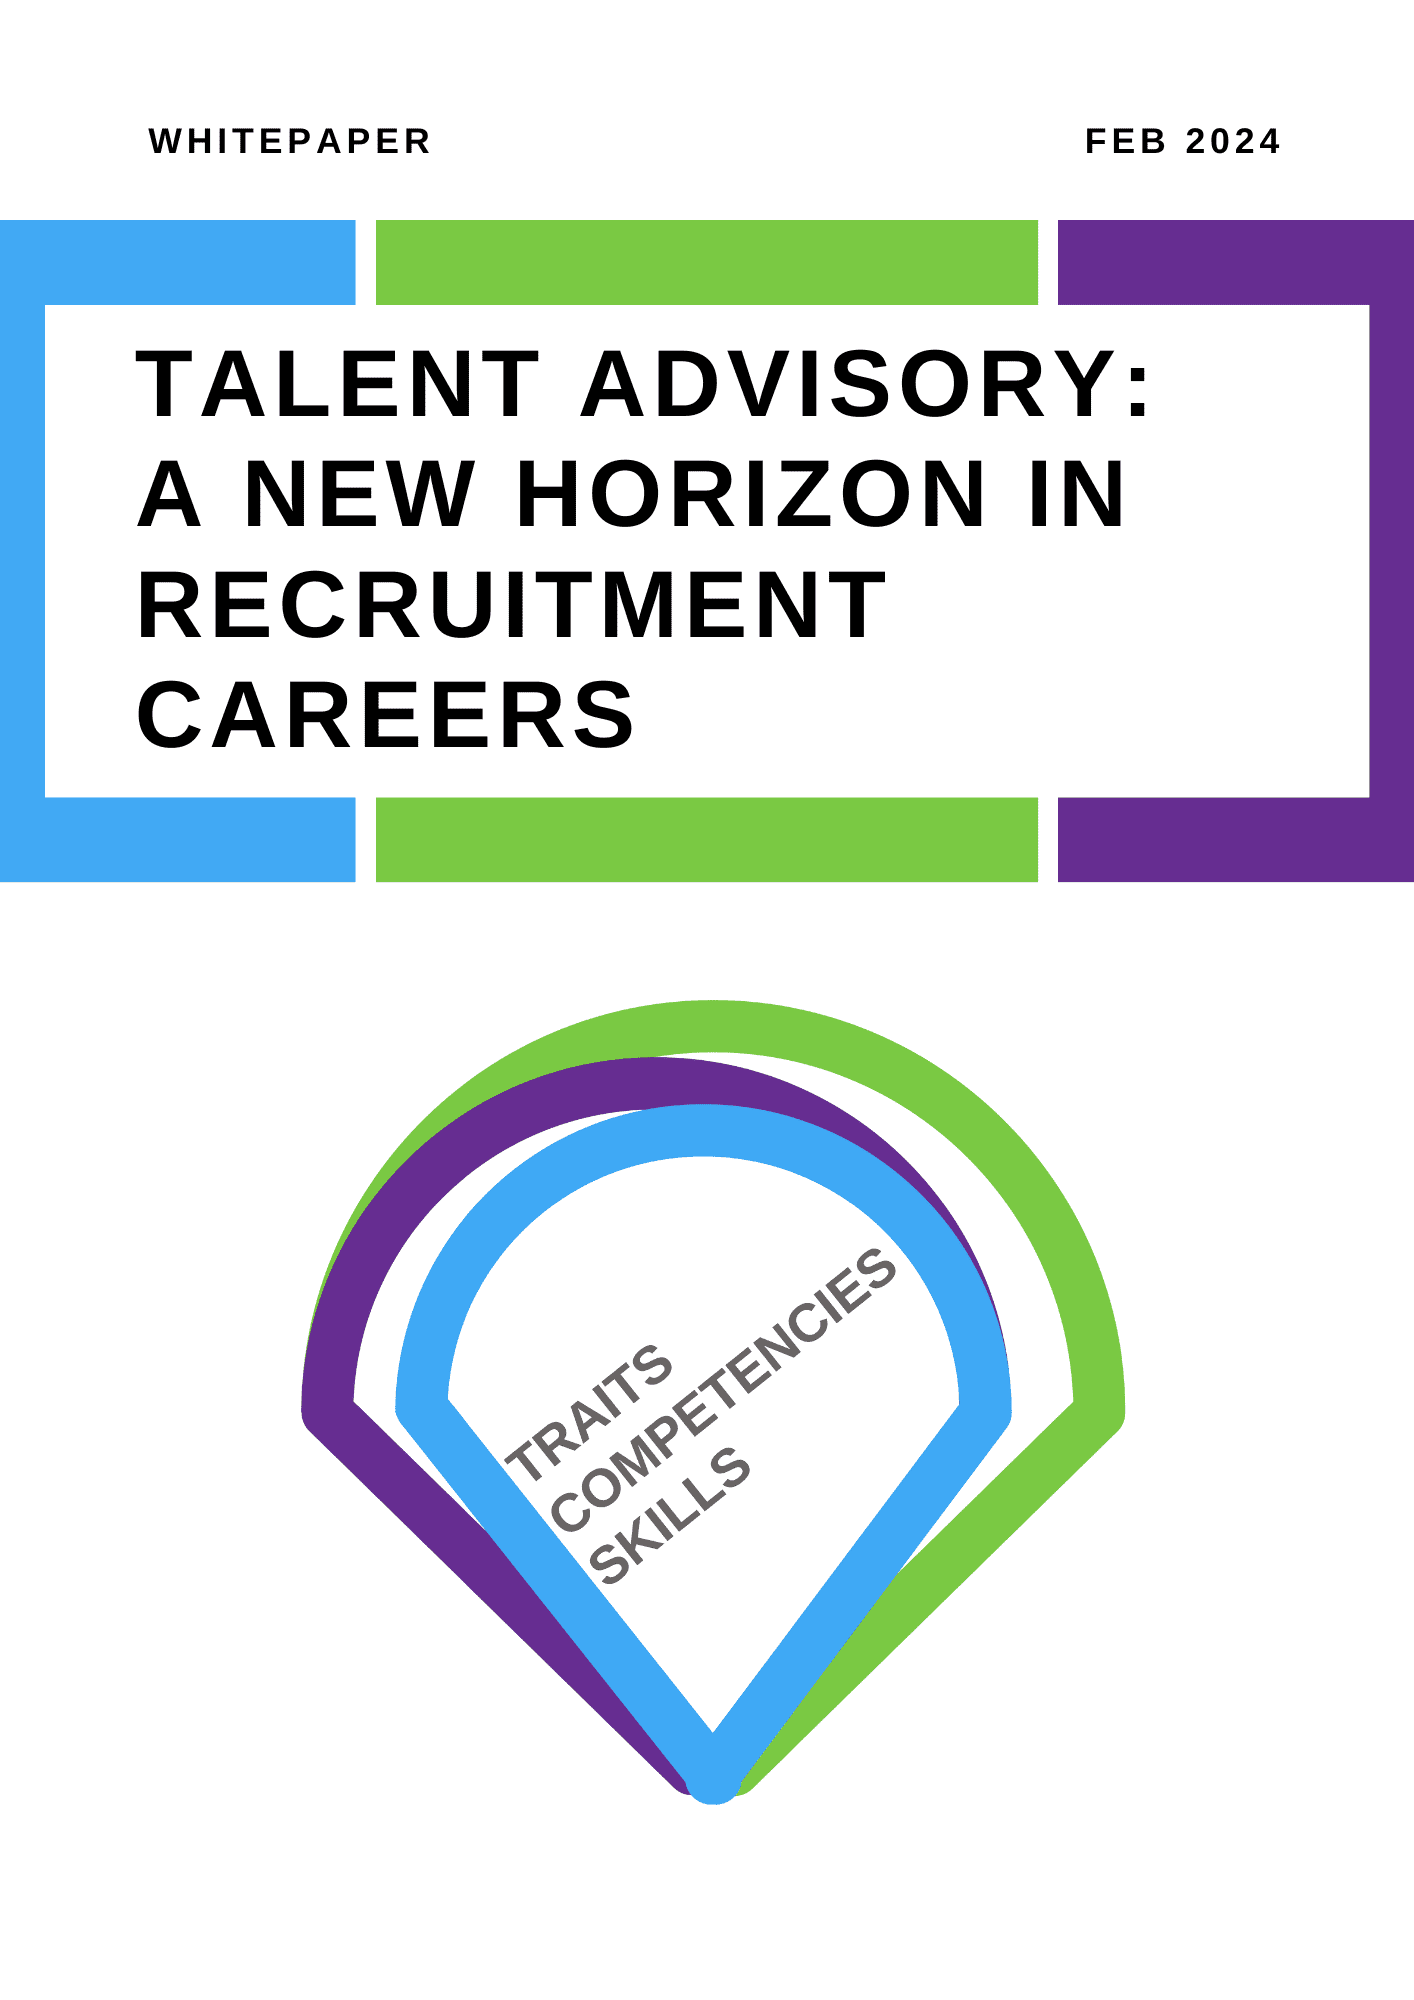 Talent Advisory whitepaper cover image